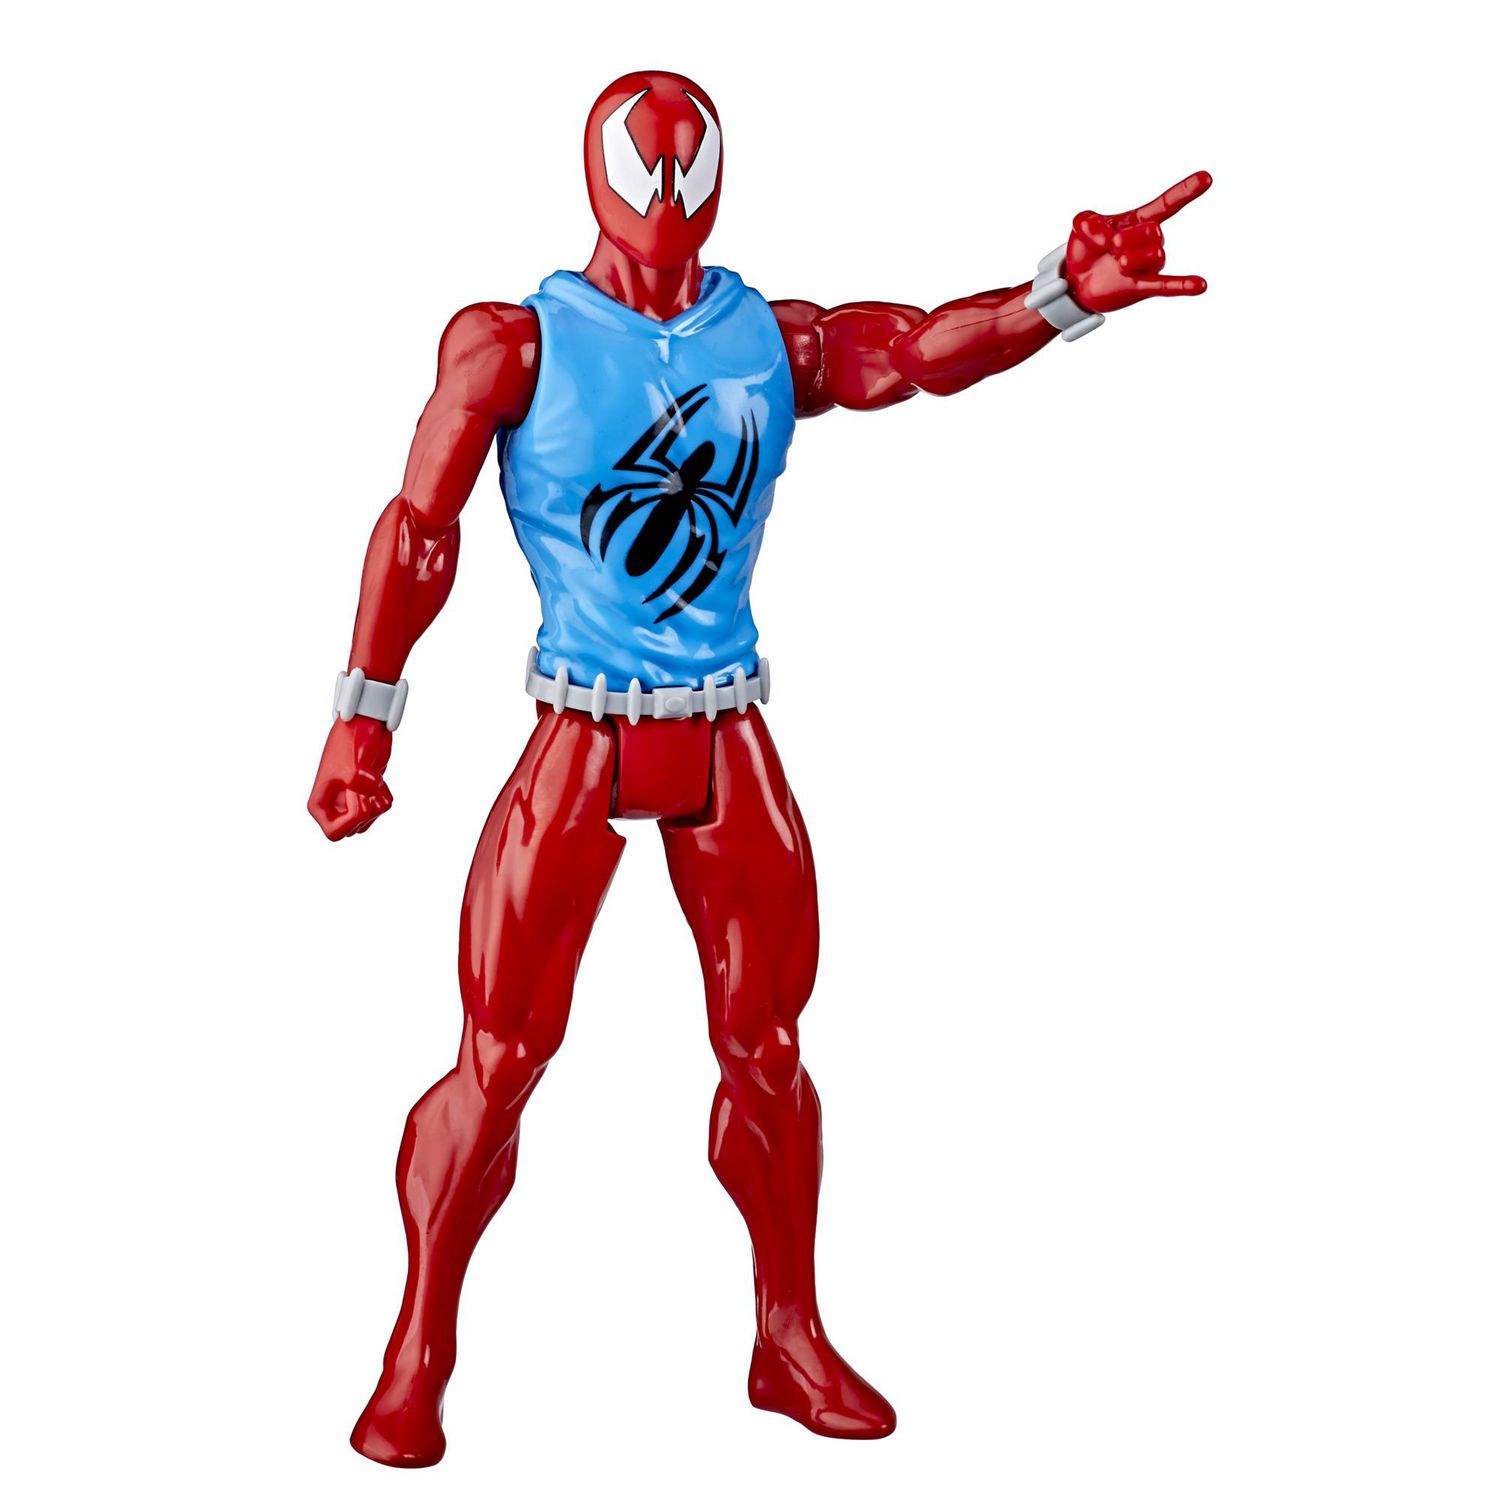 Marvel Spider-Man: Titan Hero Series Marvel's Scarlet Spider 12